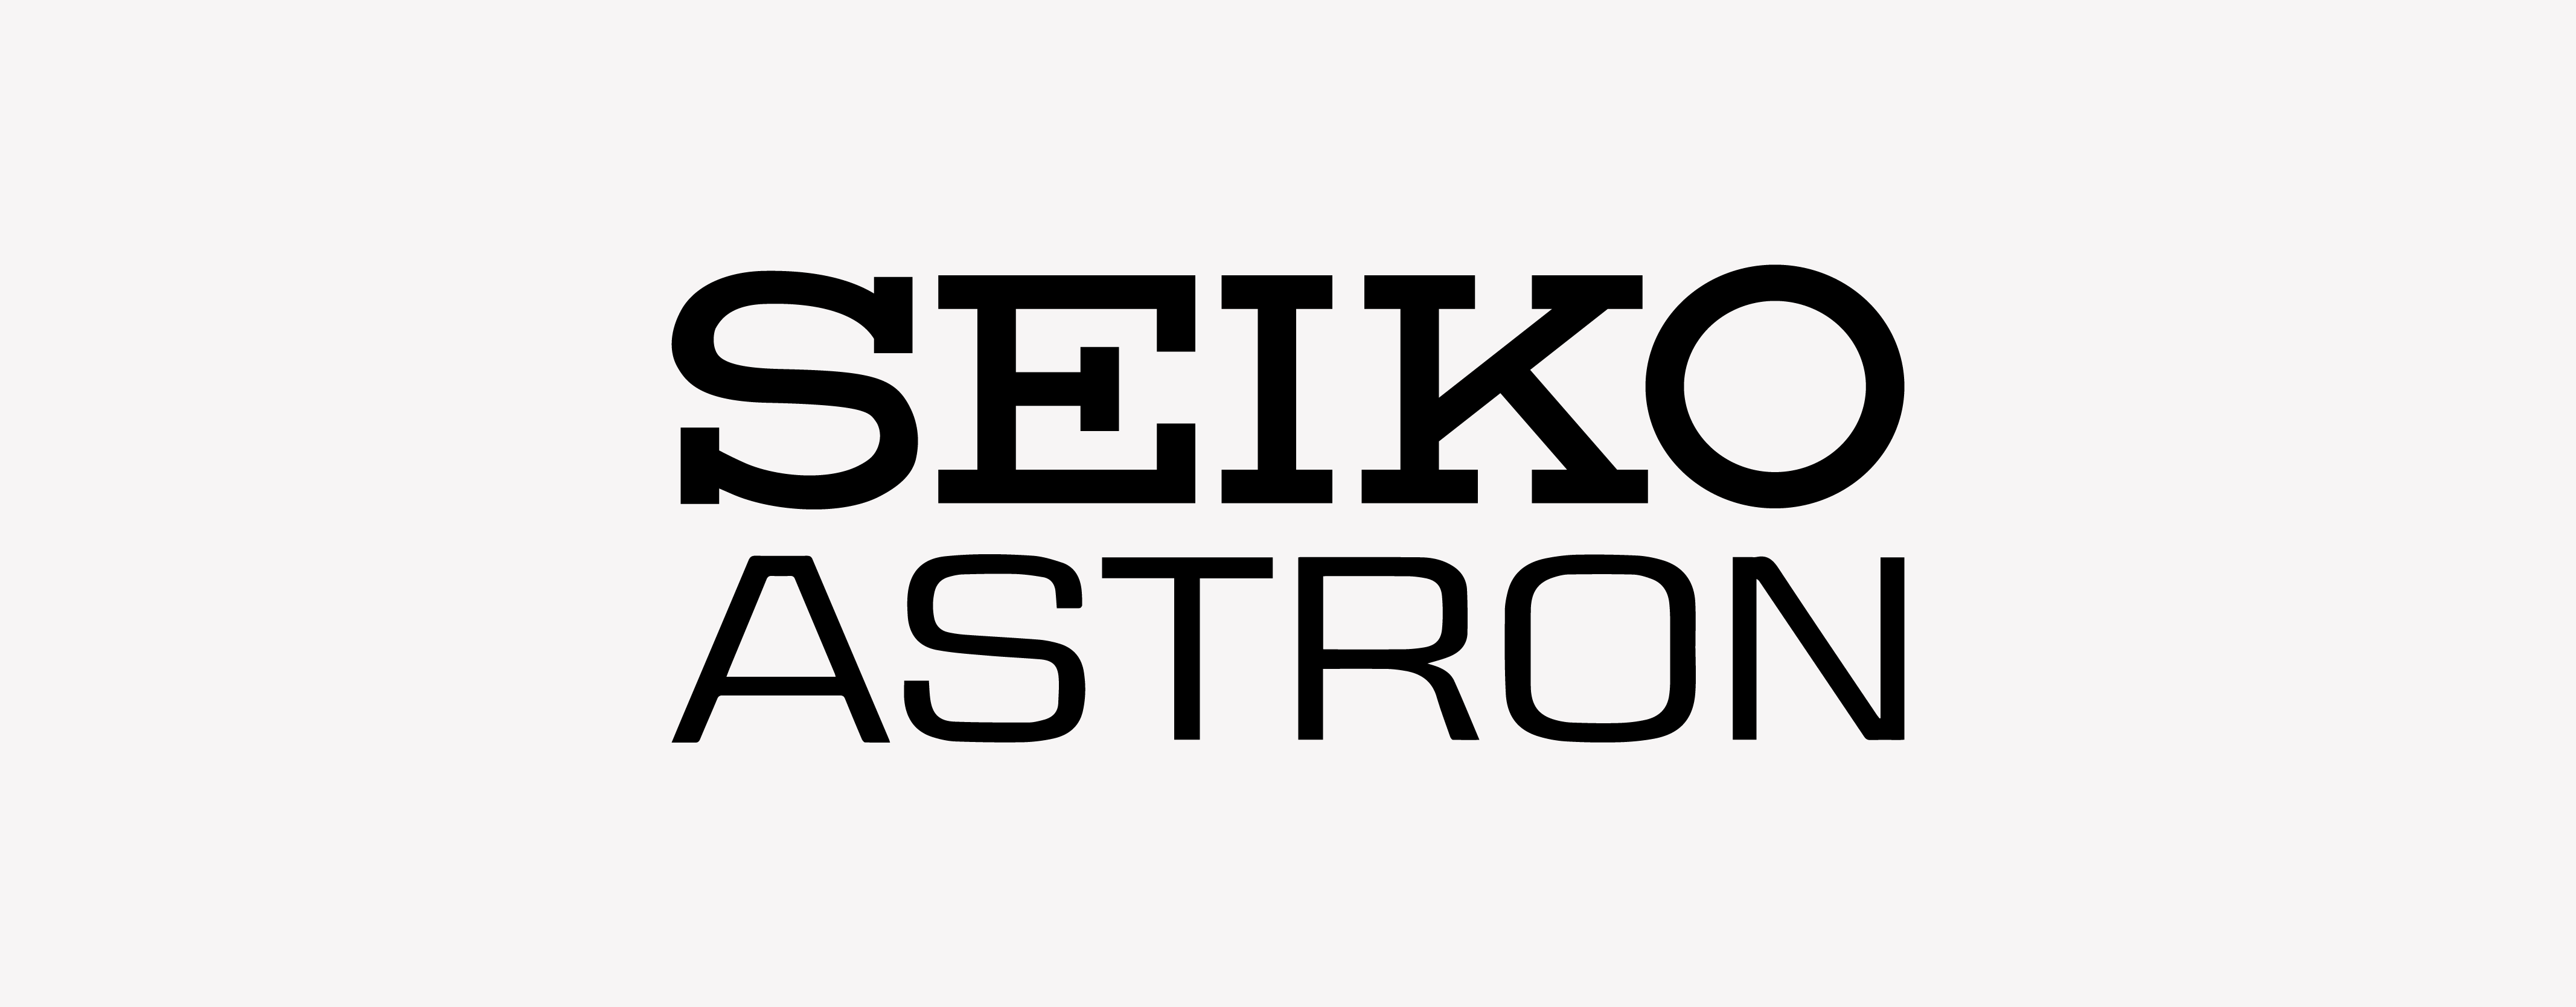 Seiko Astron – Hemsleys Jewellers